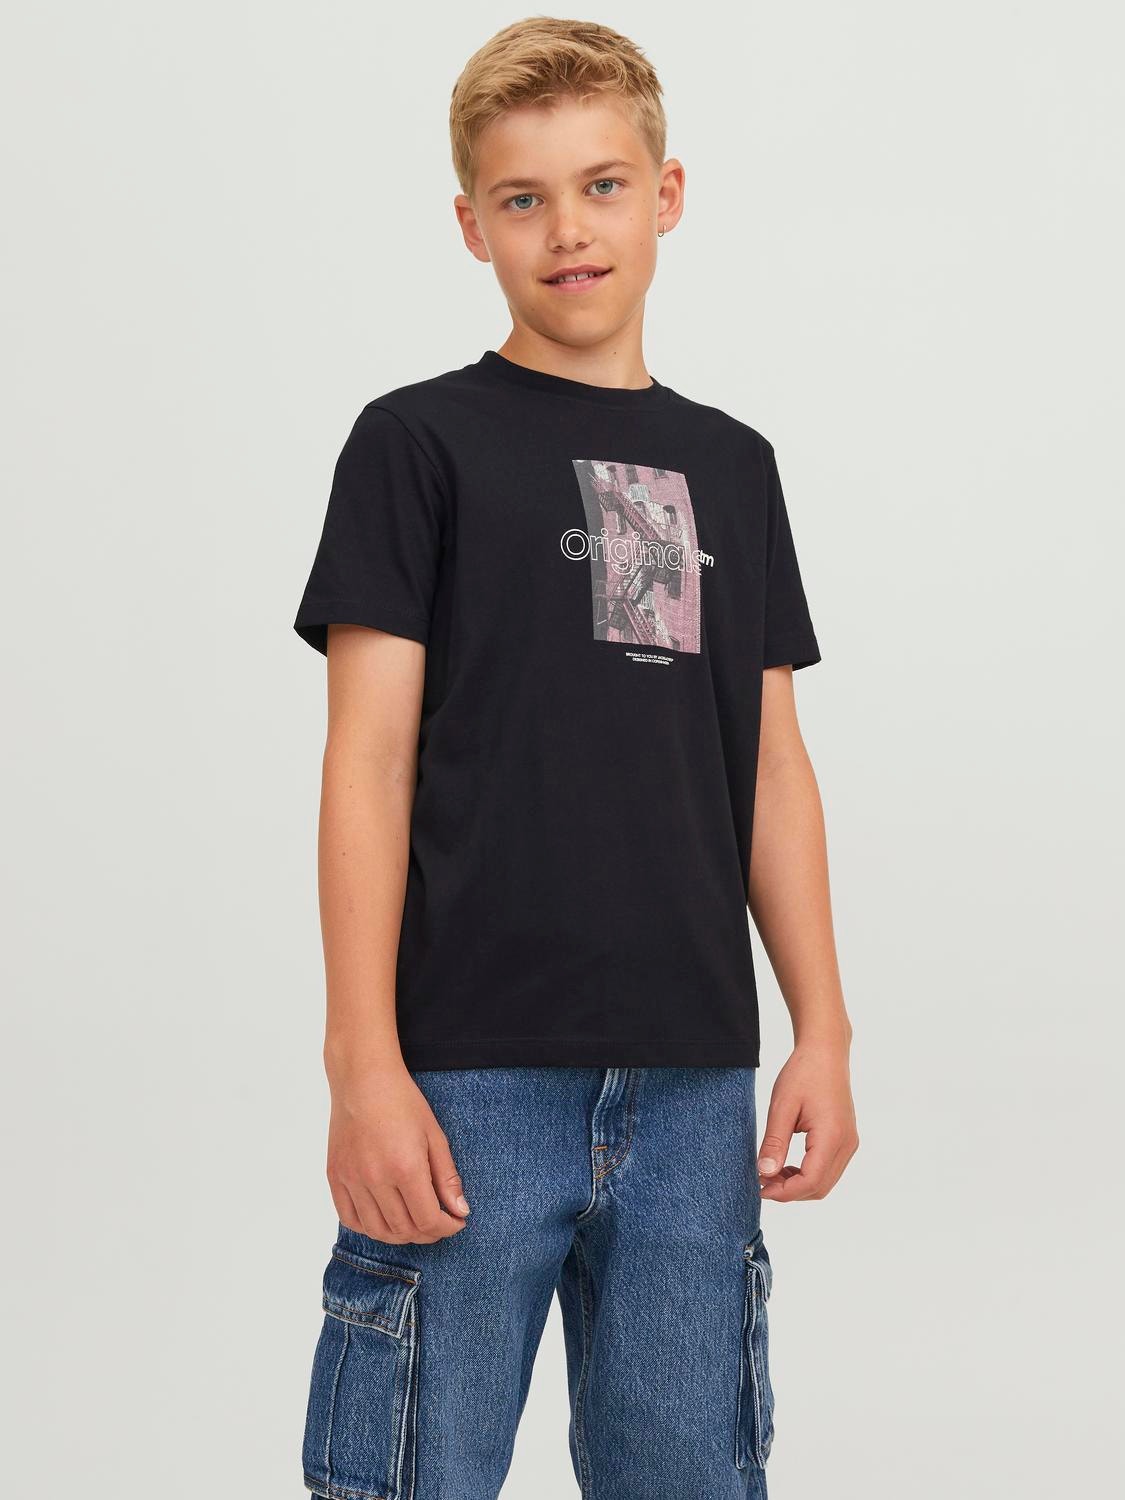 Jack & Jones Photo print T-shirt For boys -Black - 12242845